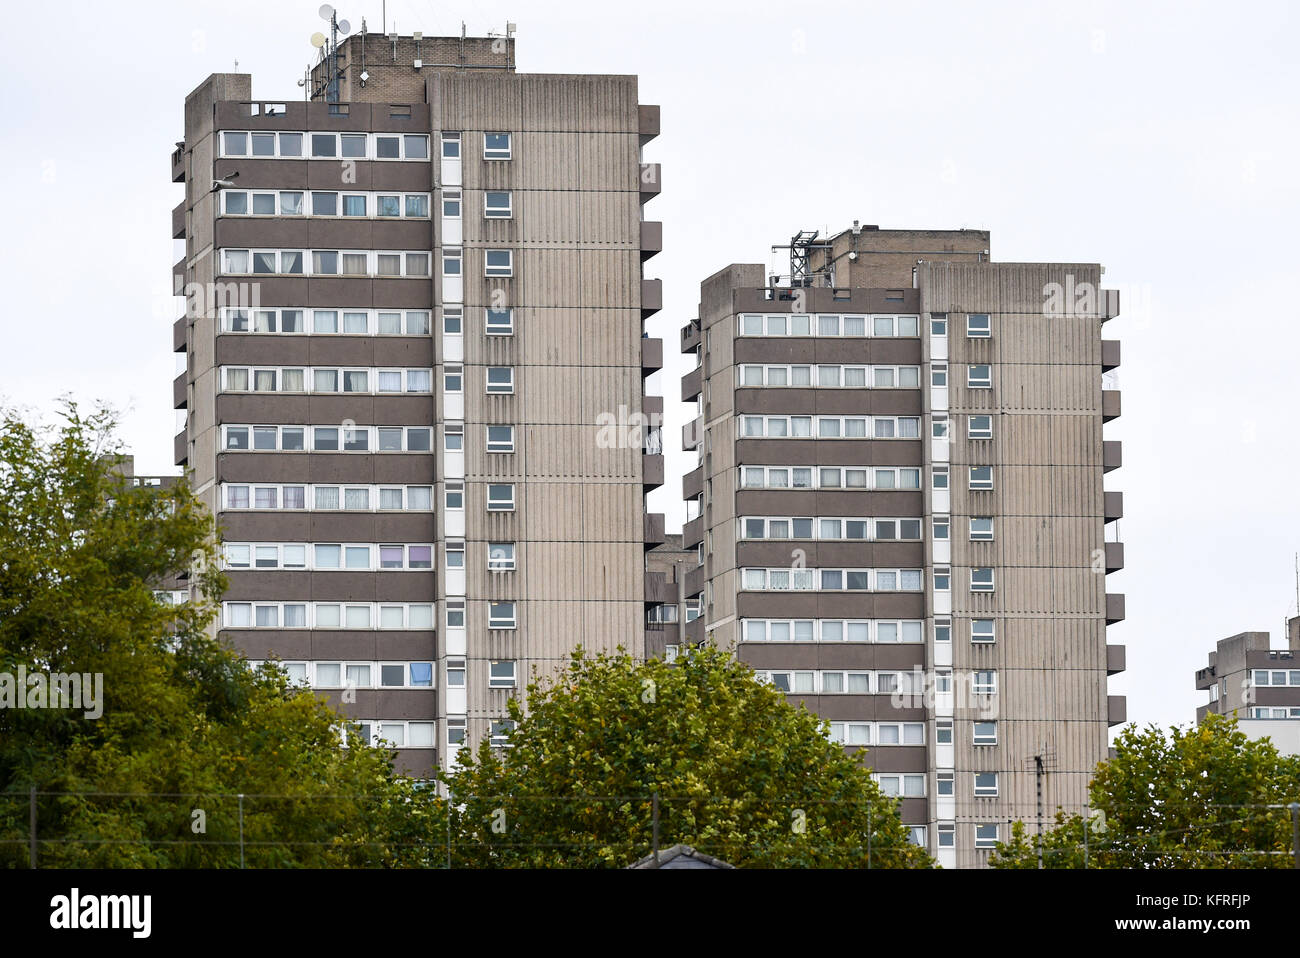 Blocks of high rise flats in Brentford Towers London Borough of Chiswick UK Stock Photo